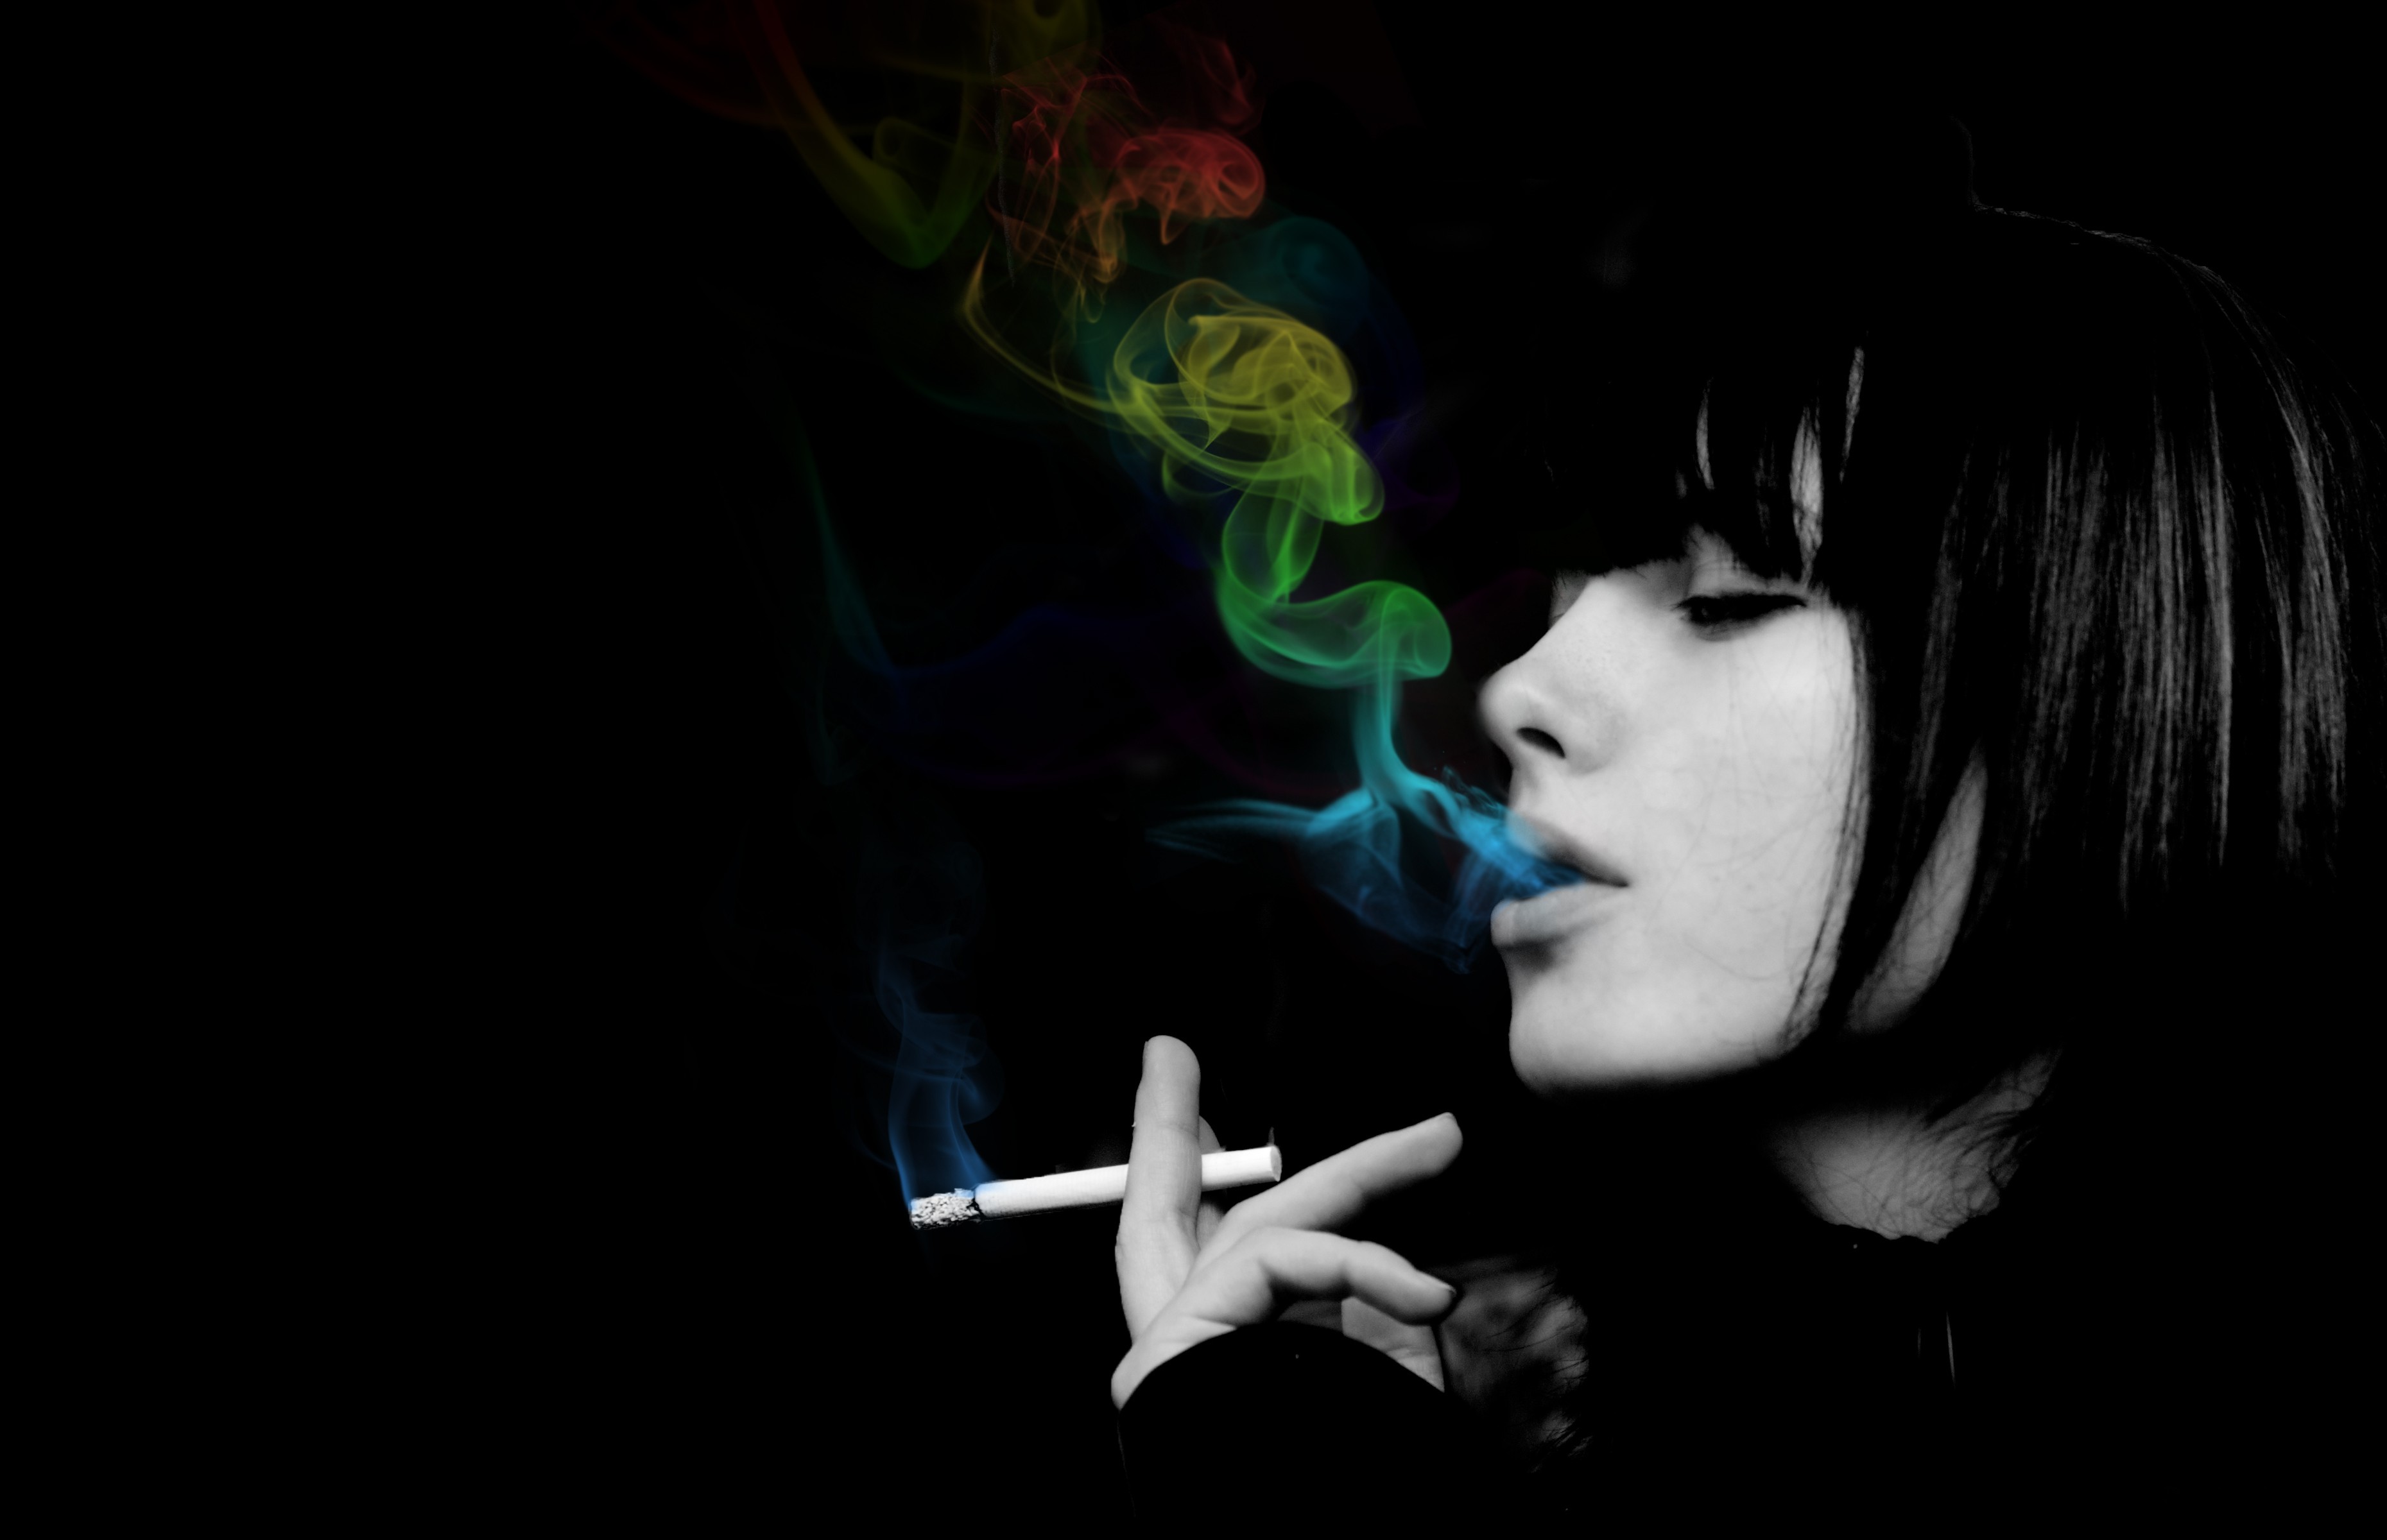 Песни tv girl cigarettes. Курящая девушка. Девушка с сигаретой. Девочка с каре и сигаретой. Курящая девушка с каре.